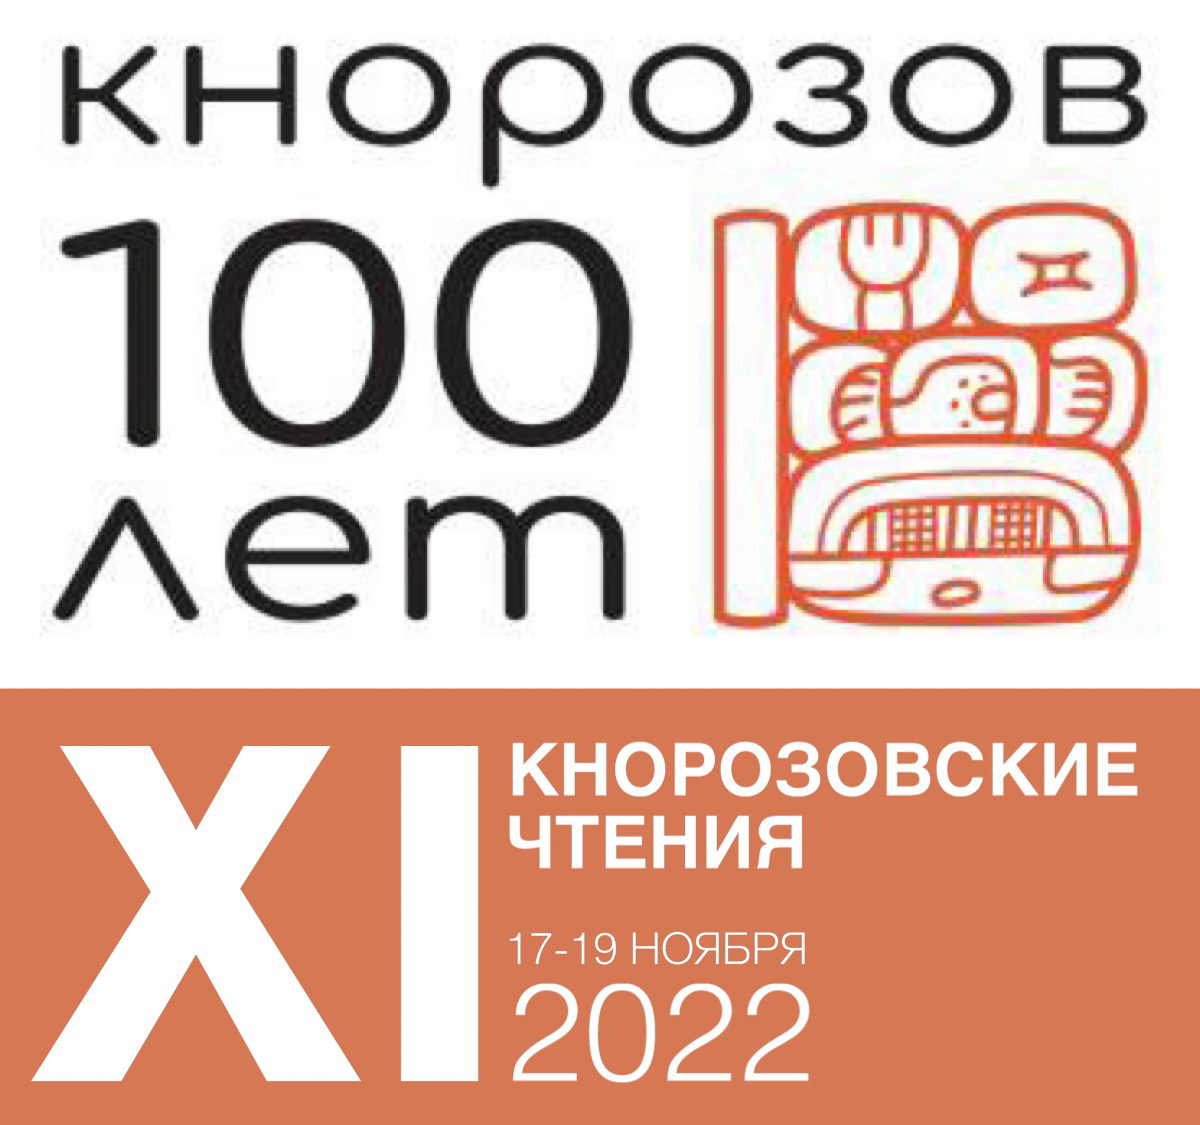 Представители исторического факультета МГУ приняли участие в XI Кнорозовских чтениях